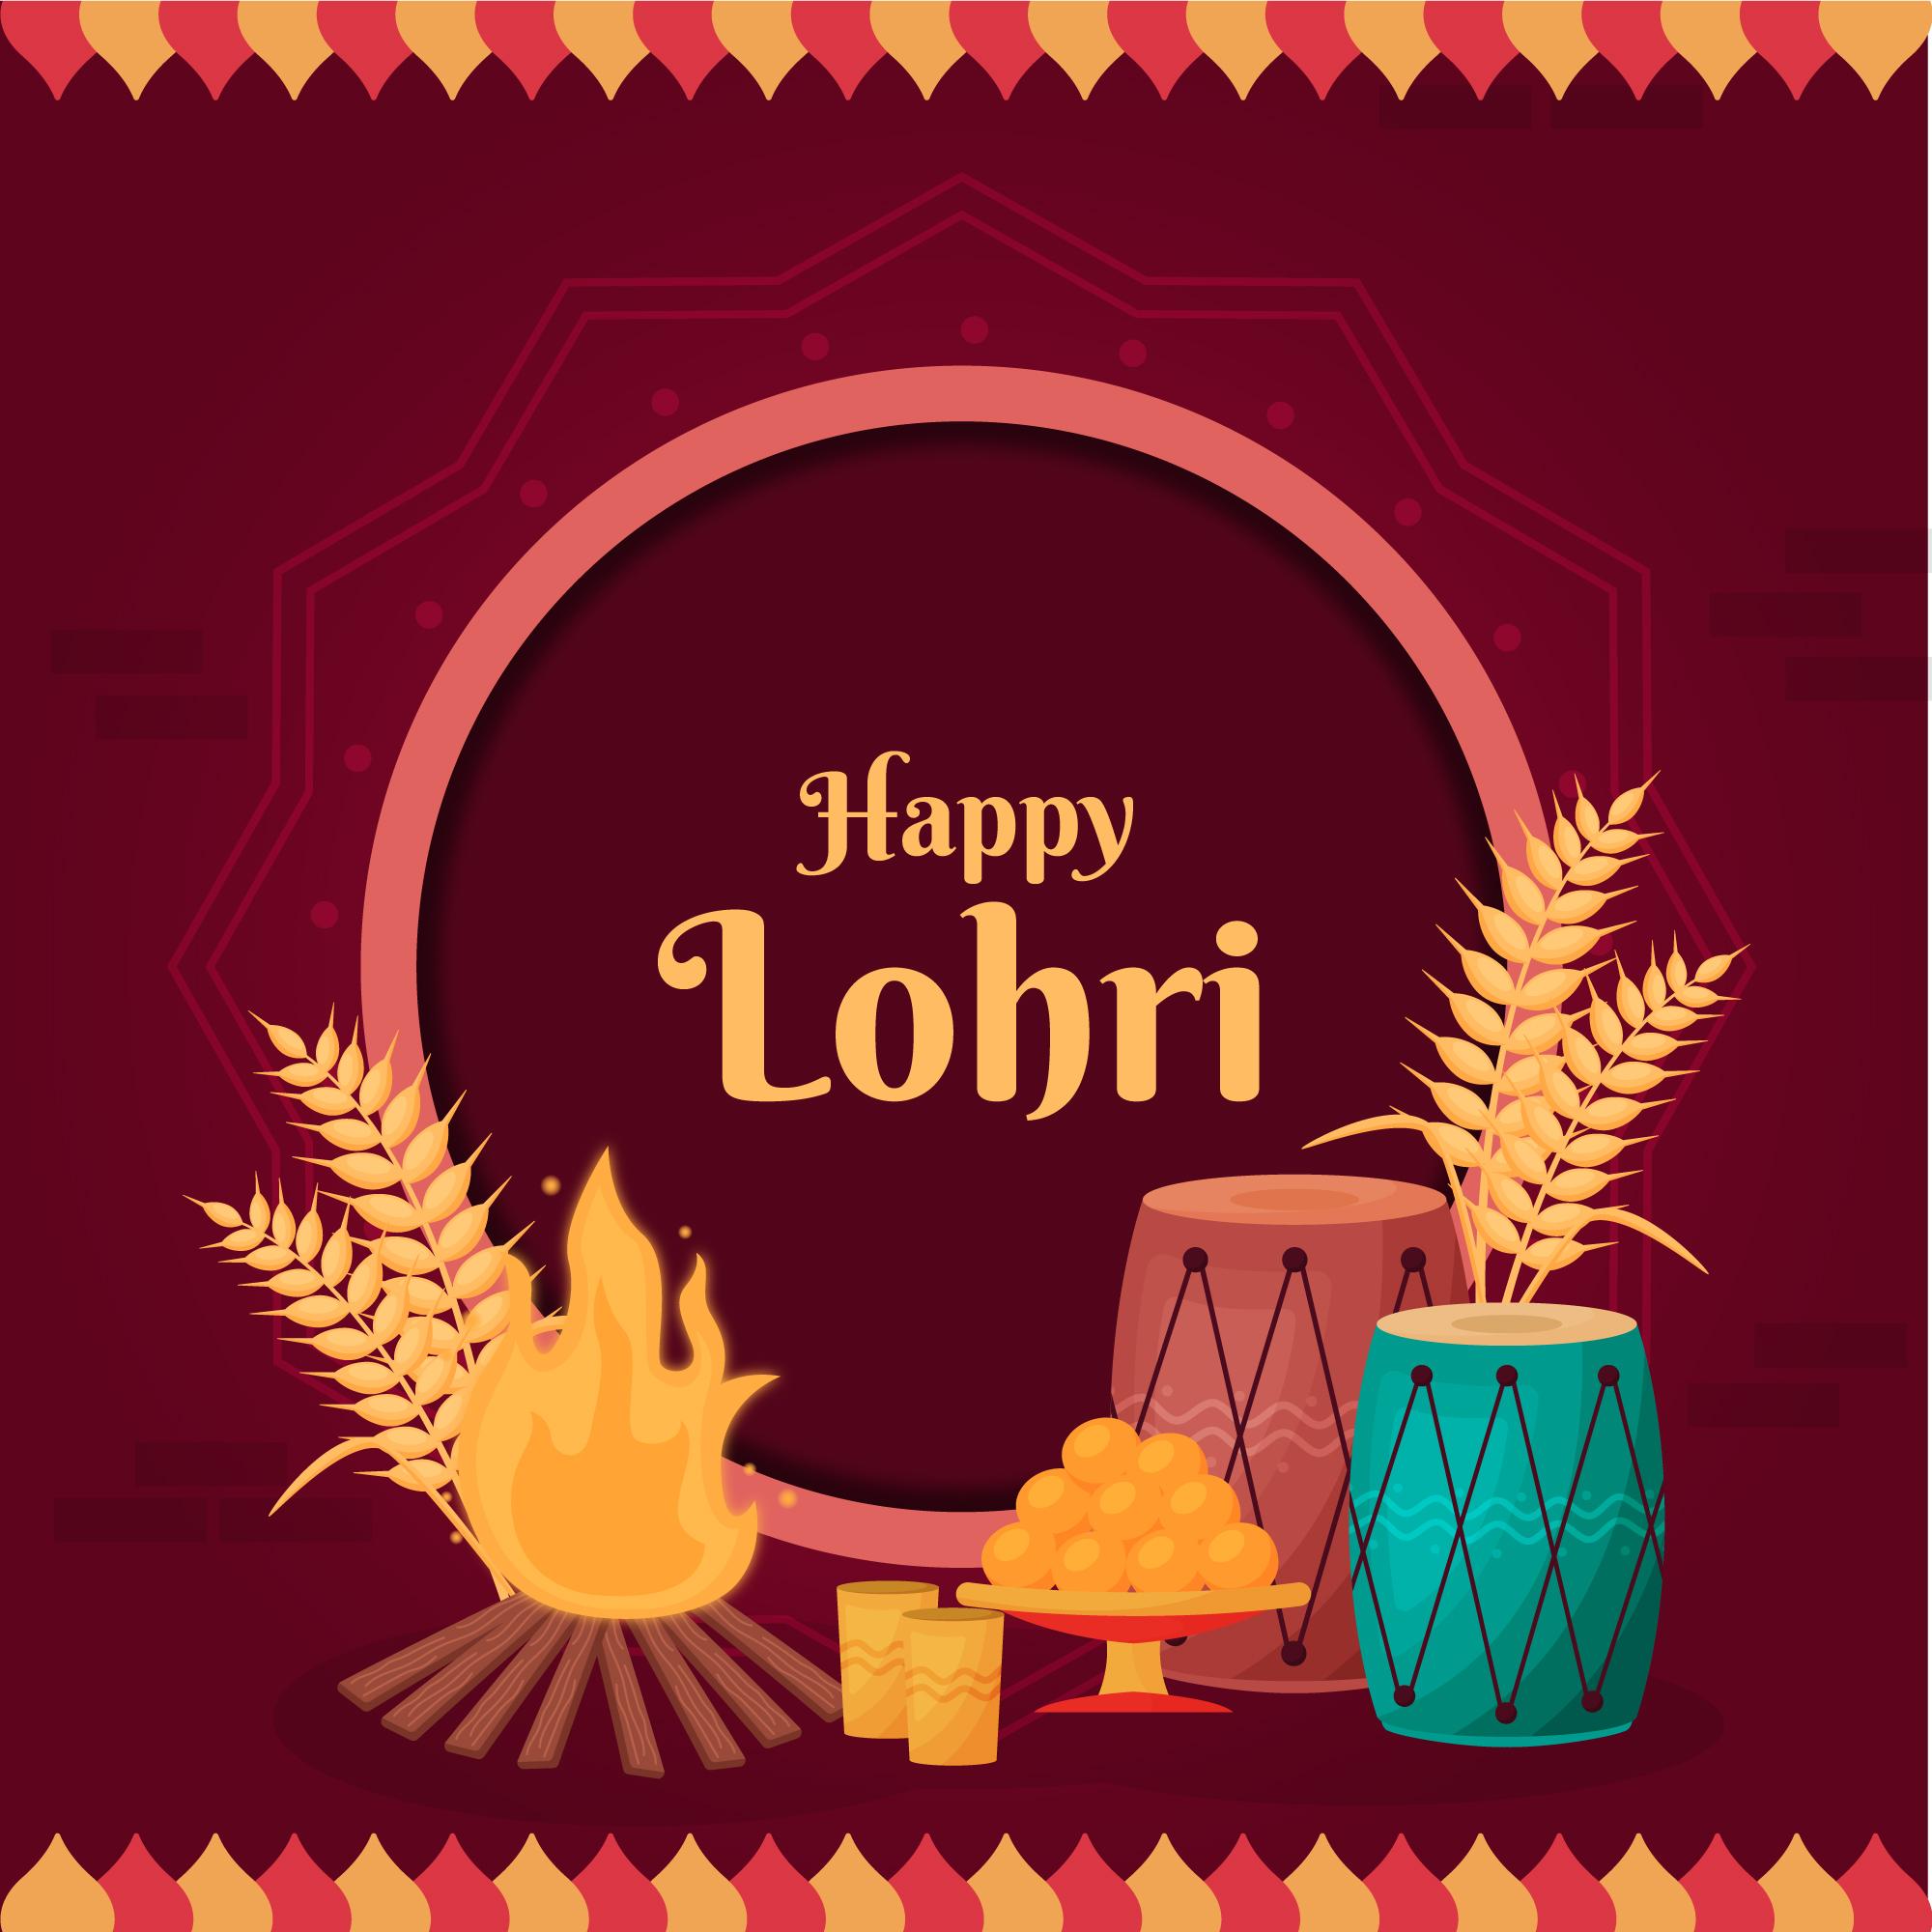 Happy Lohri image download